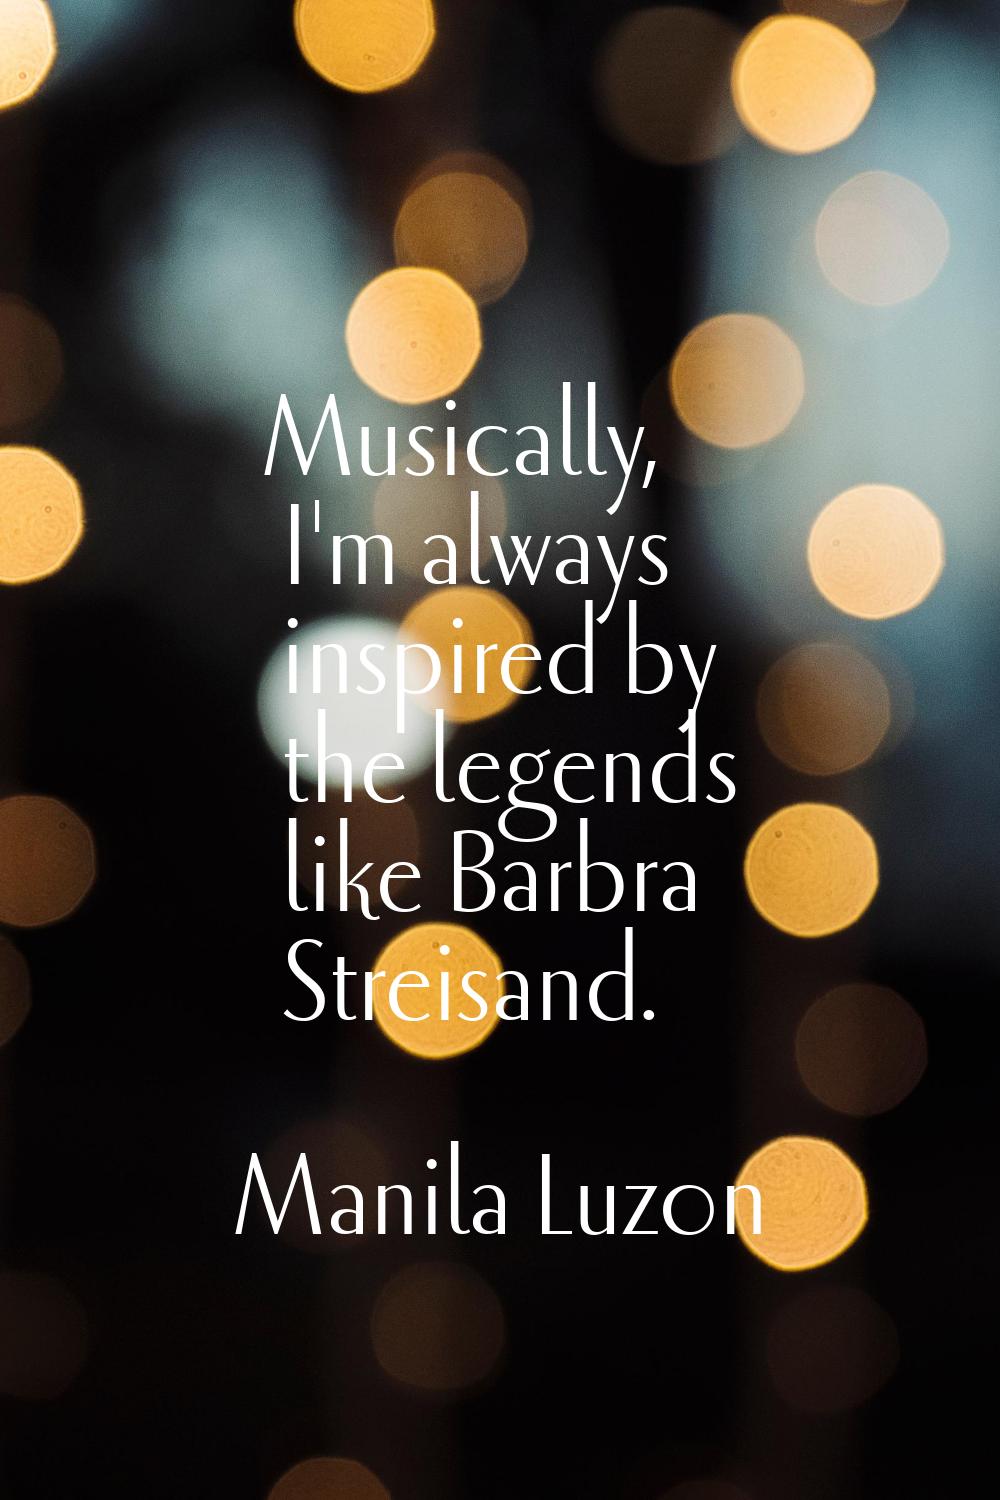 Musically, I'm always inspired by the legends like Barbra Streisand.